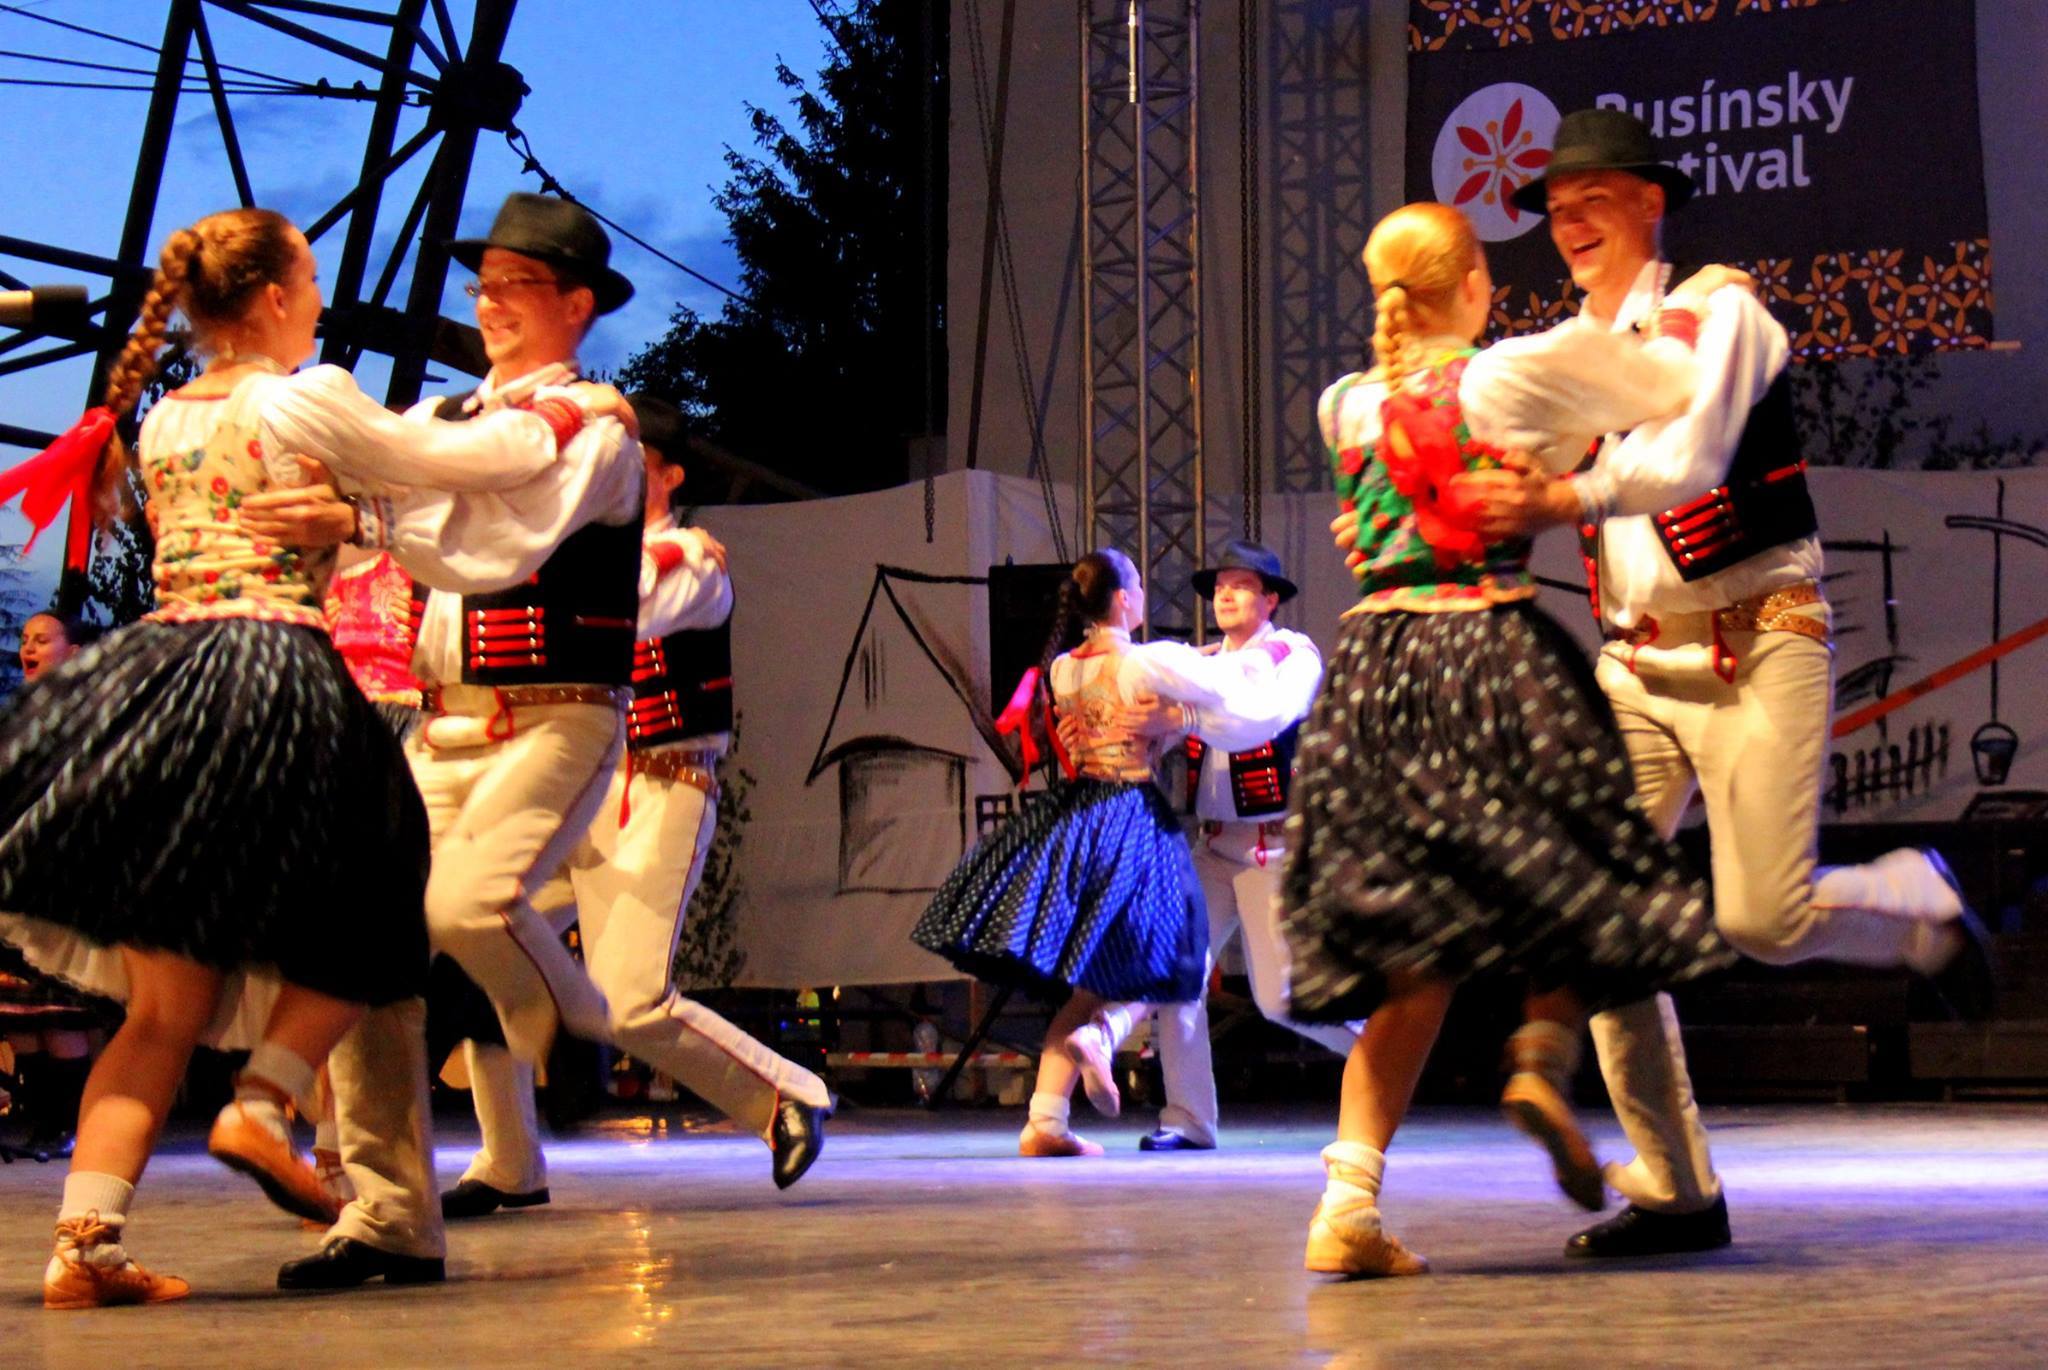 International [fjuzn] festival from 23rd to 30th of April in Bratislava -  Internationals Bratislava